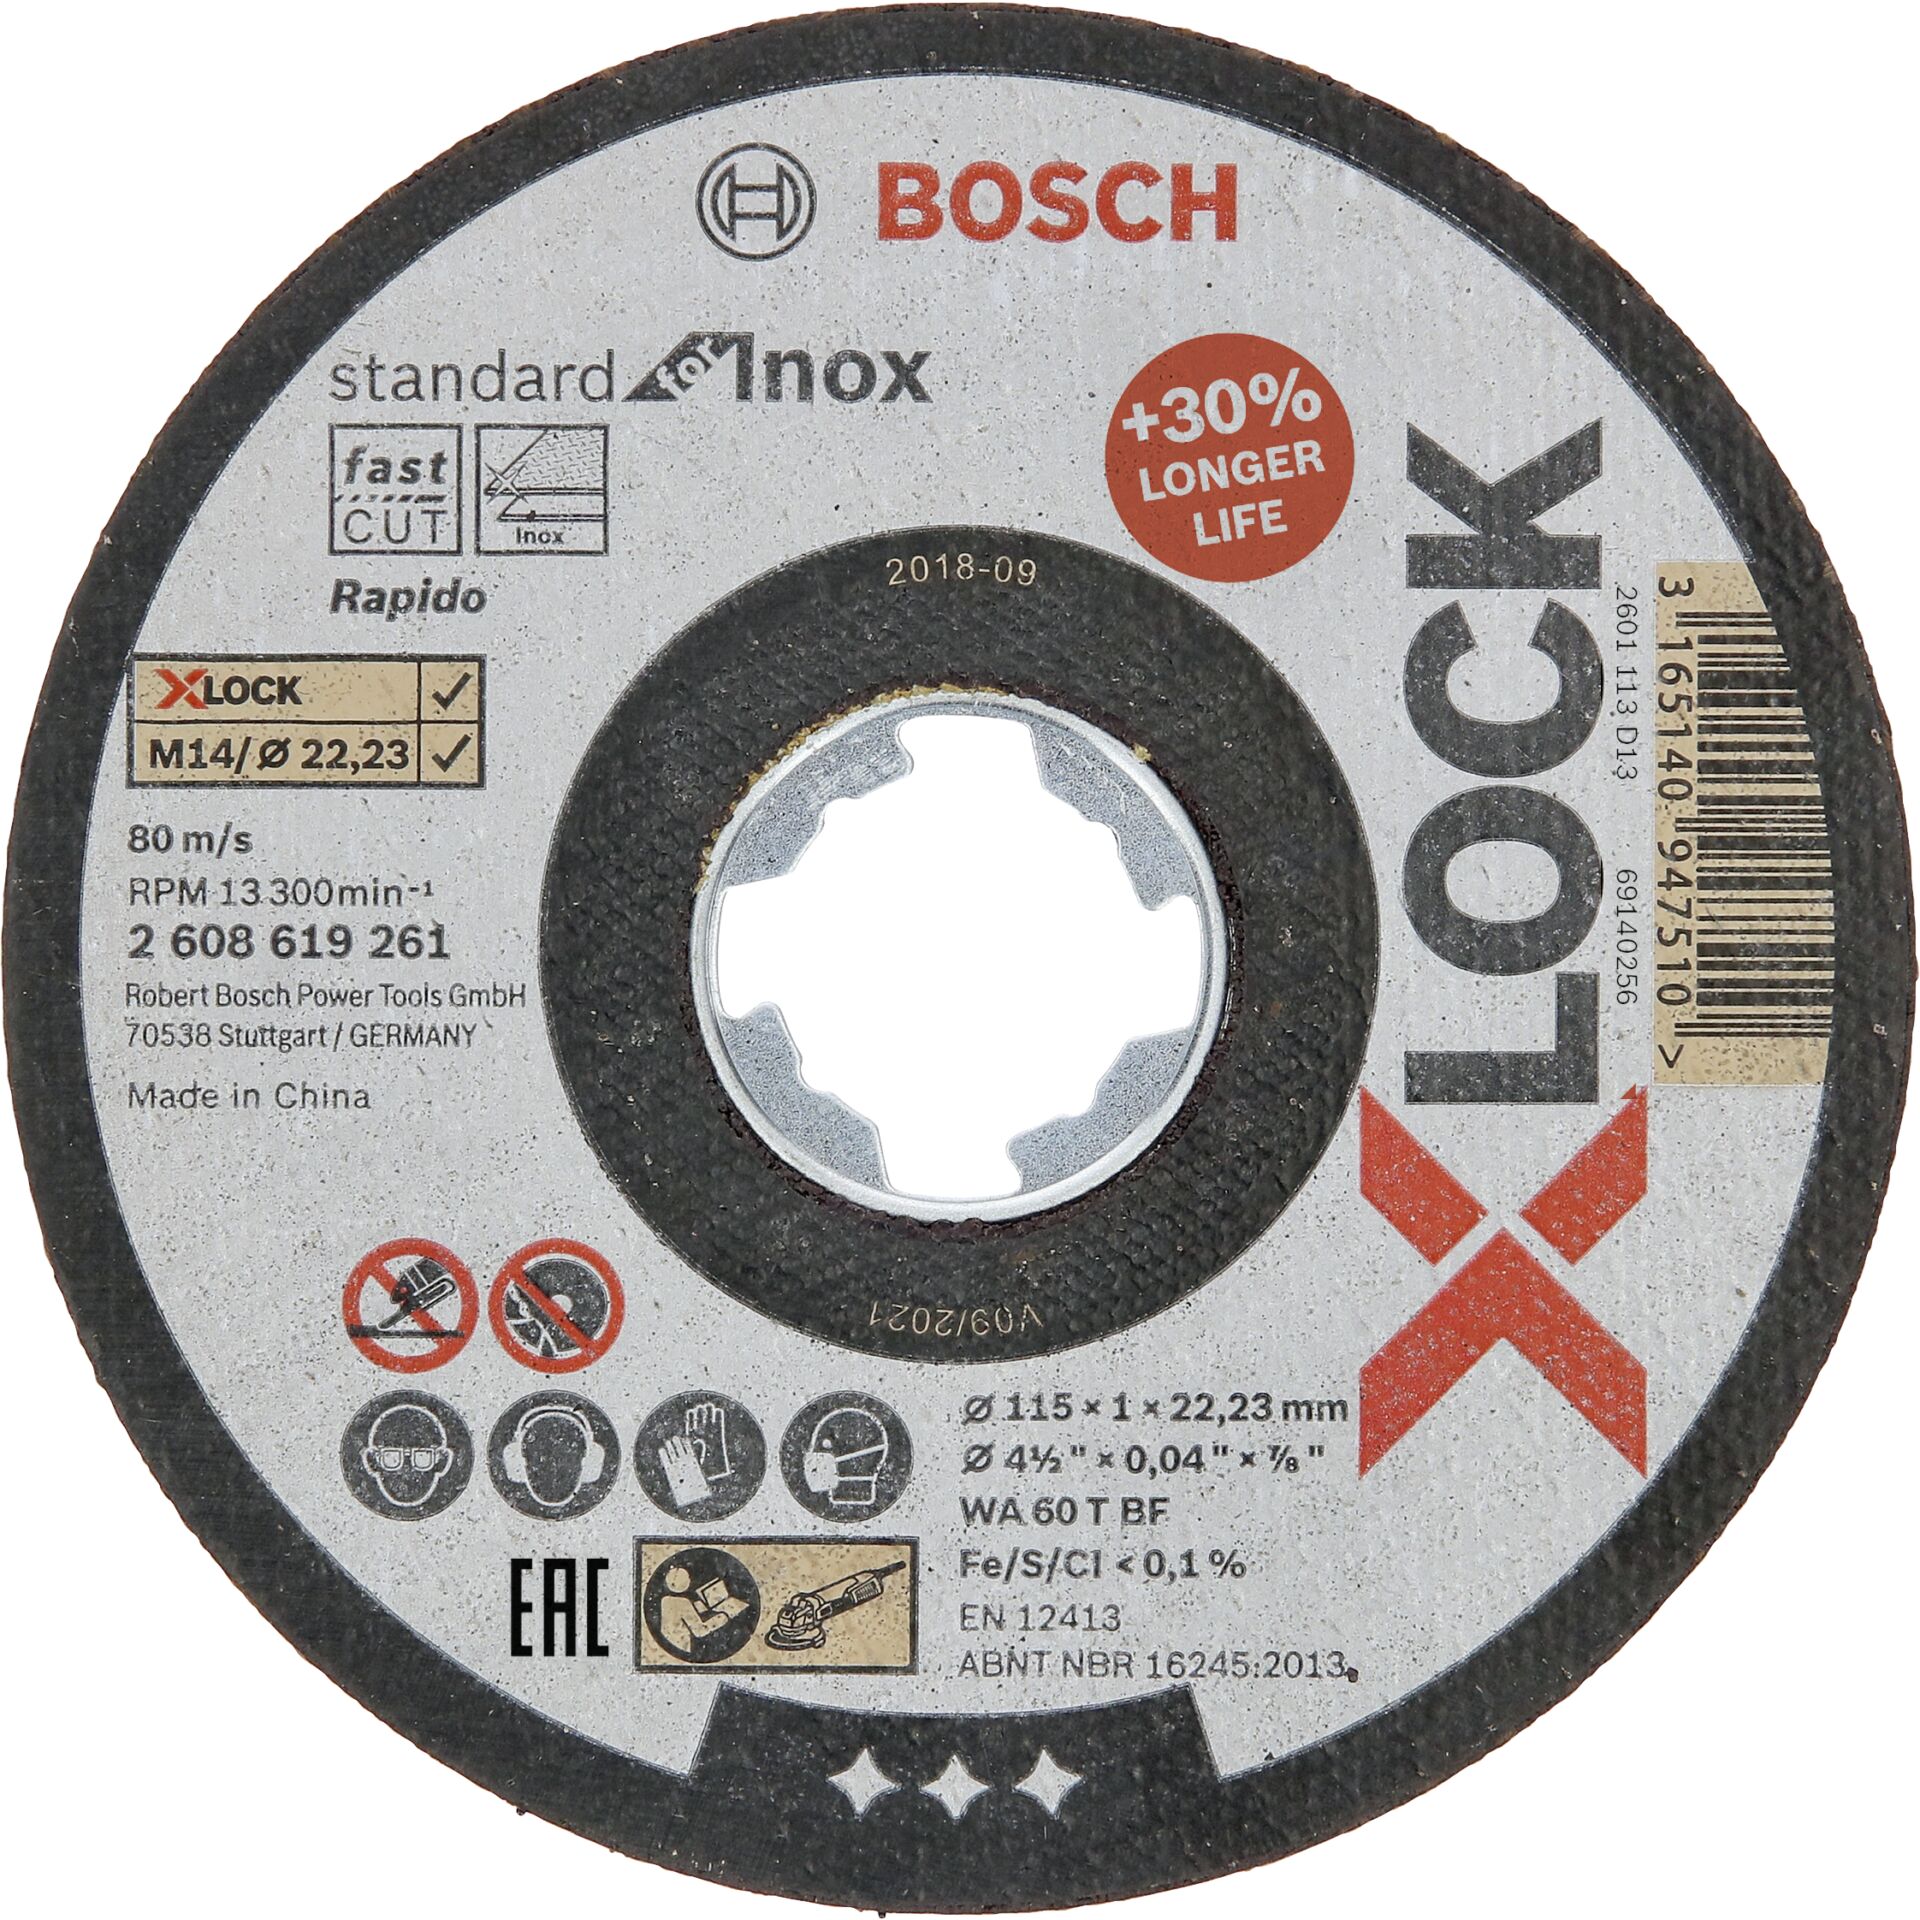 Bosch X-LOCK cutting disk 115x1,0 Std f INOX